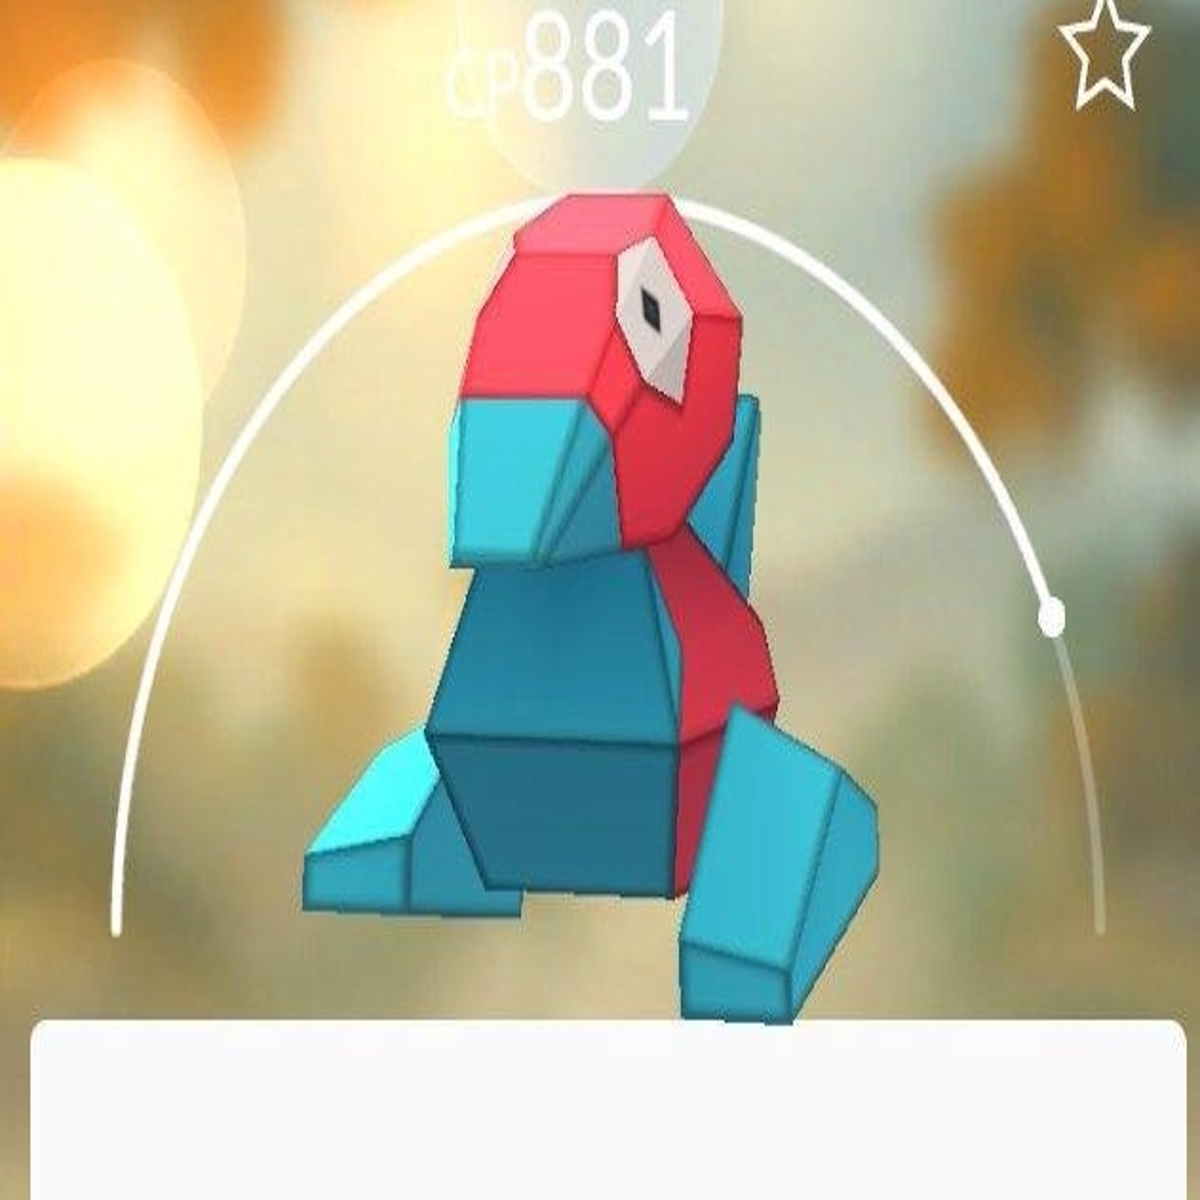 Can Haunter be Shiny in Pokémon Go? - Polygon